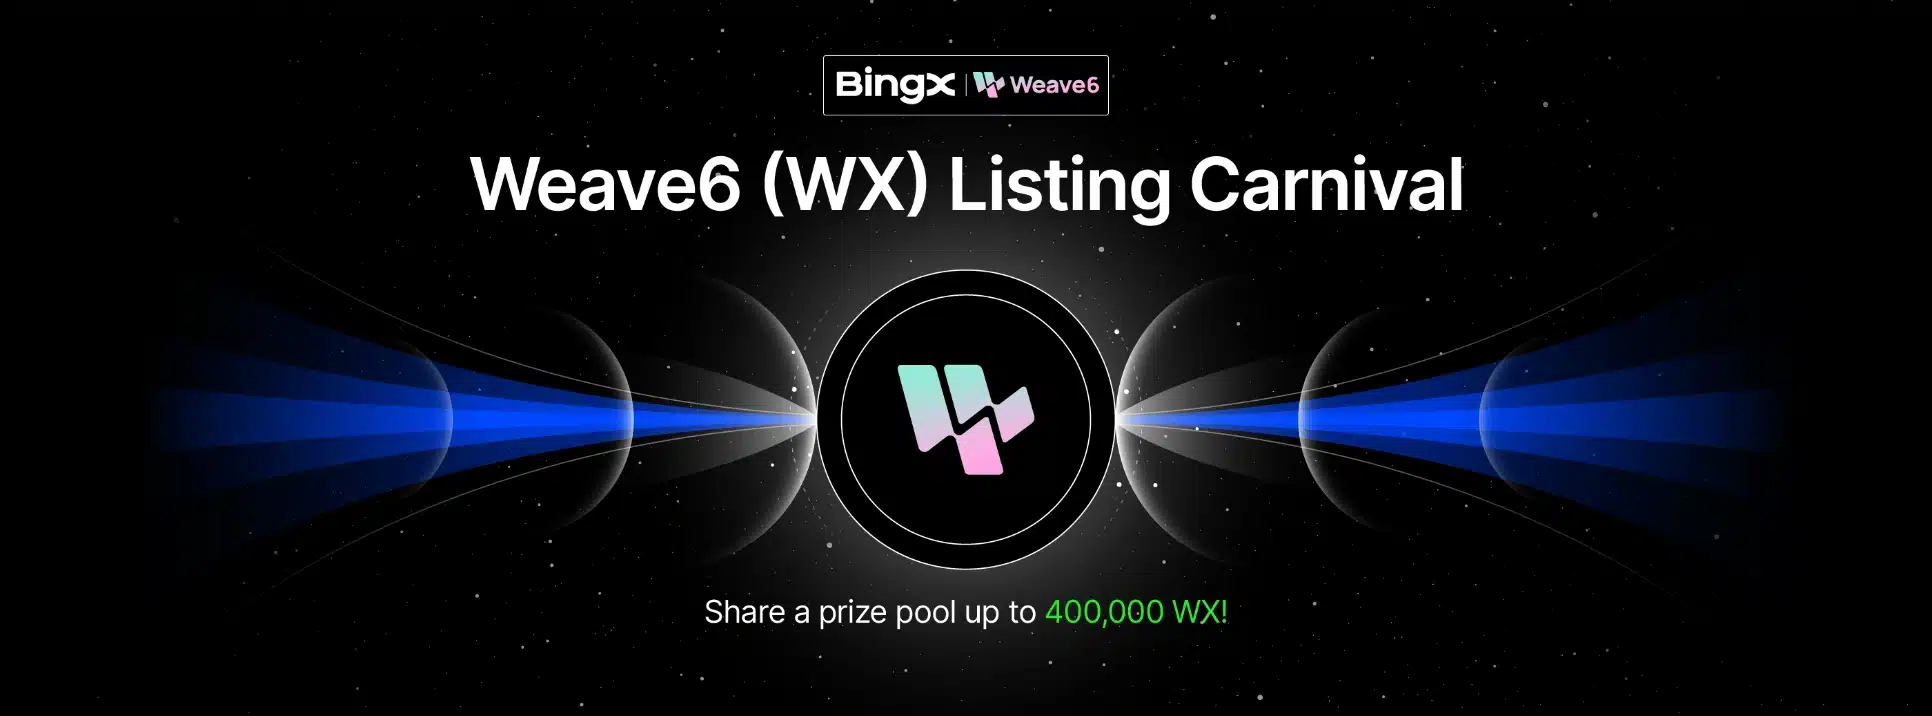 Wx Listing Carnival On Bingx